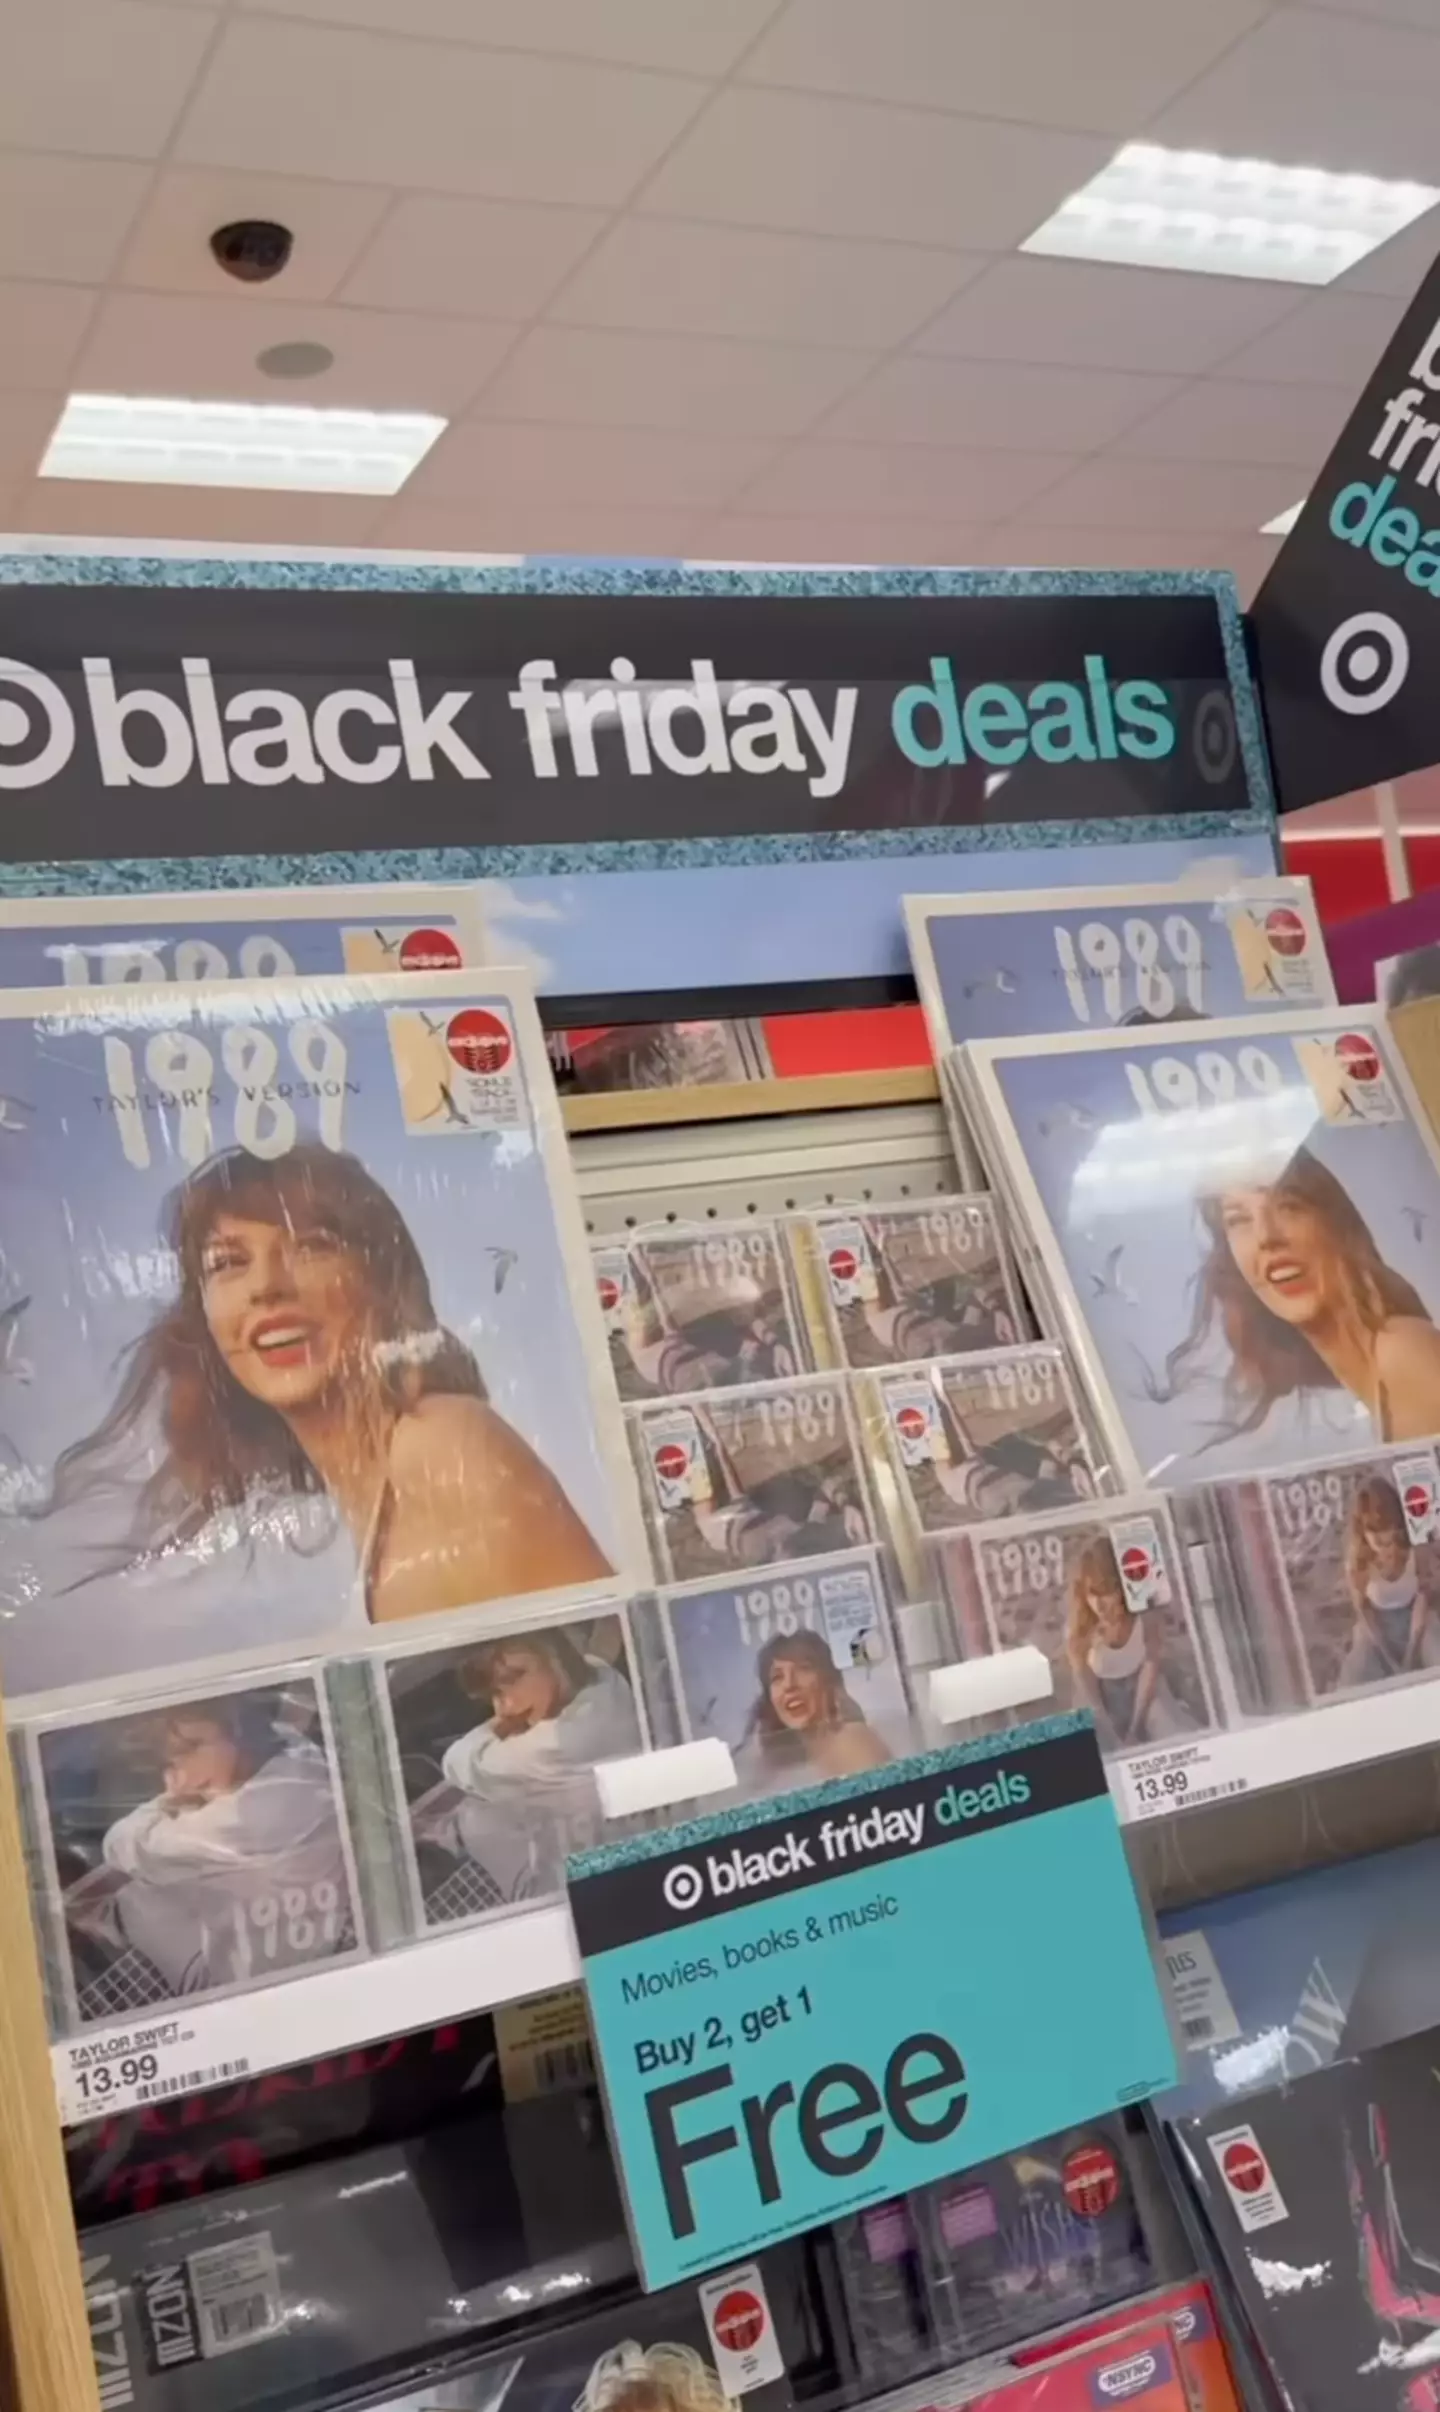 Target has been advertising it's Black Friday deals on social media.